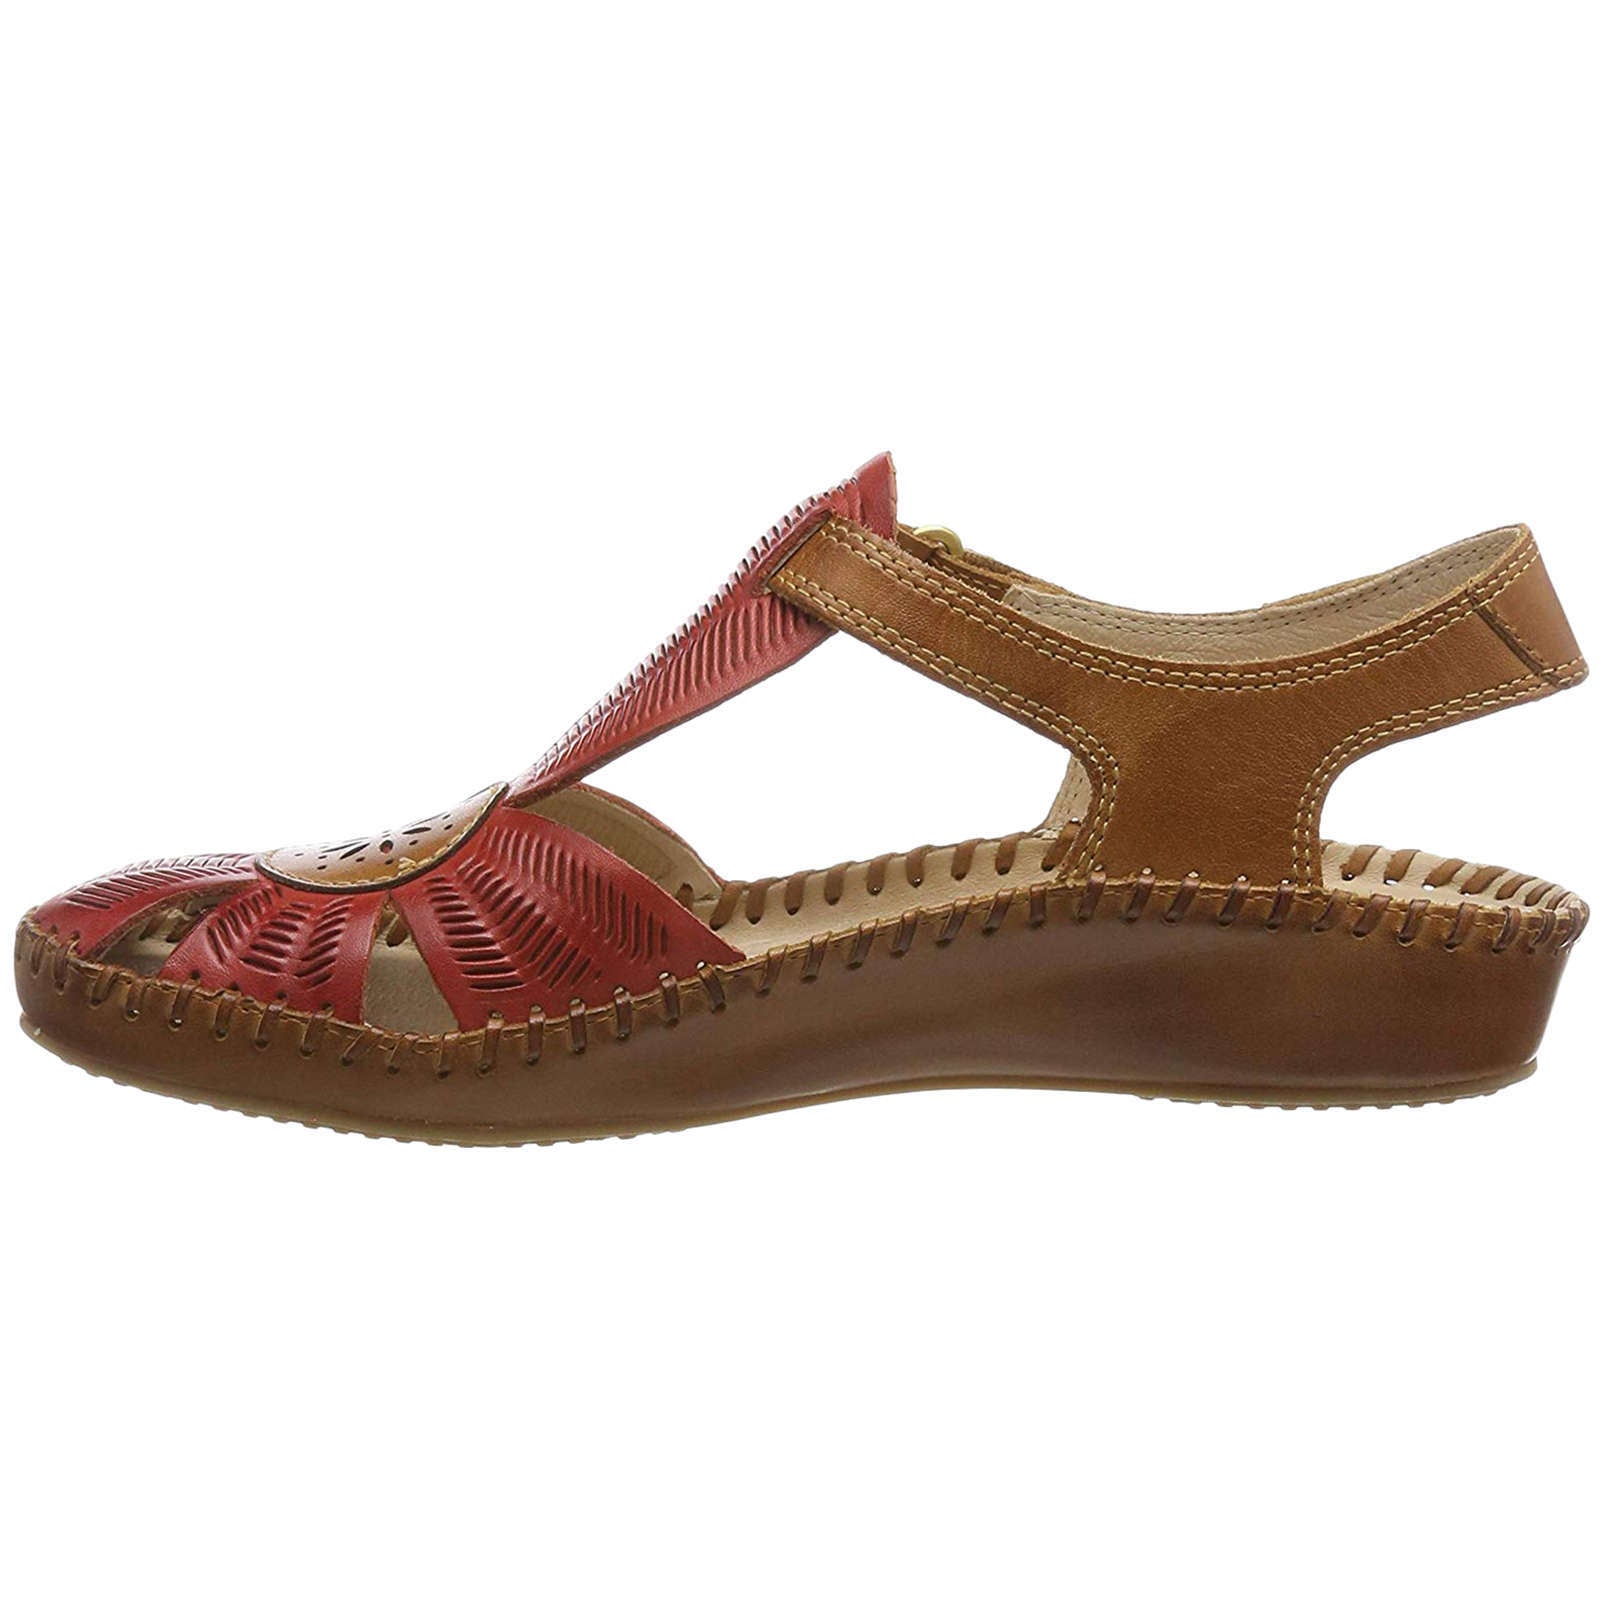 Pikolinos Puerto Vallarta 655-0575 Leather Womens Sandals#color_coral brandy